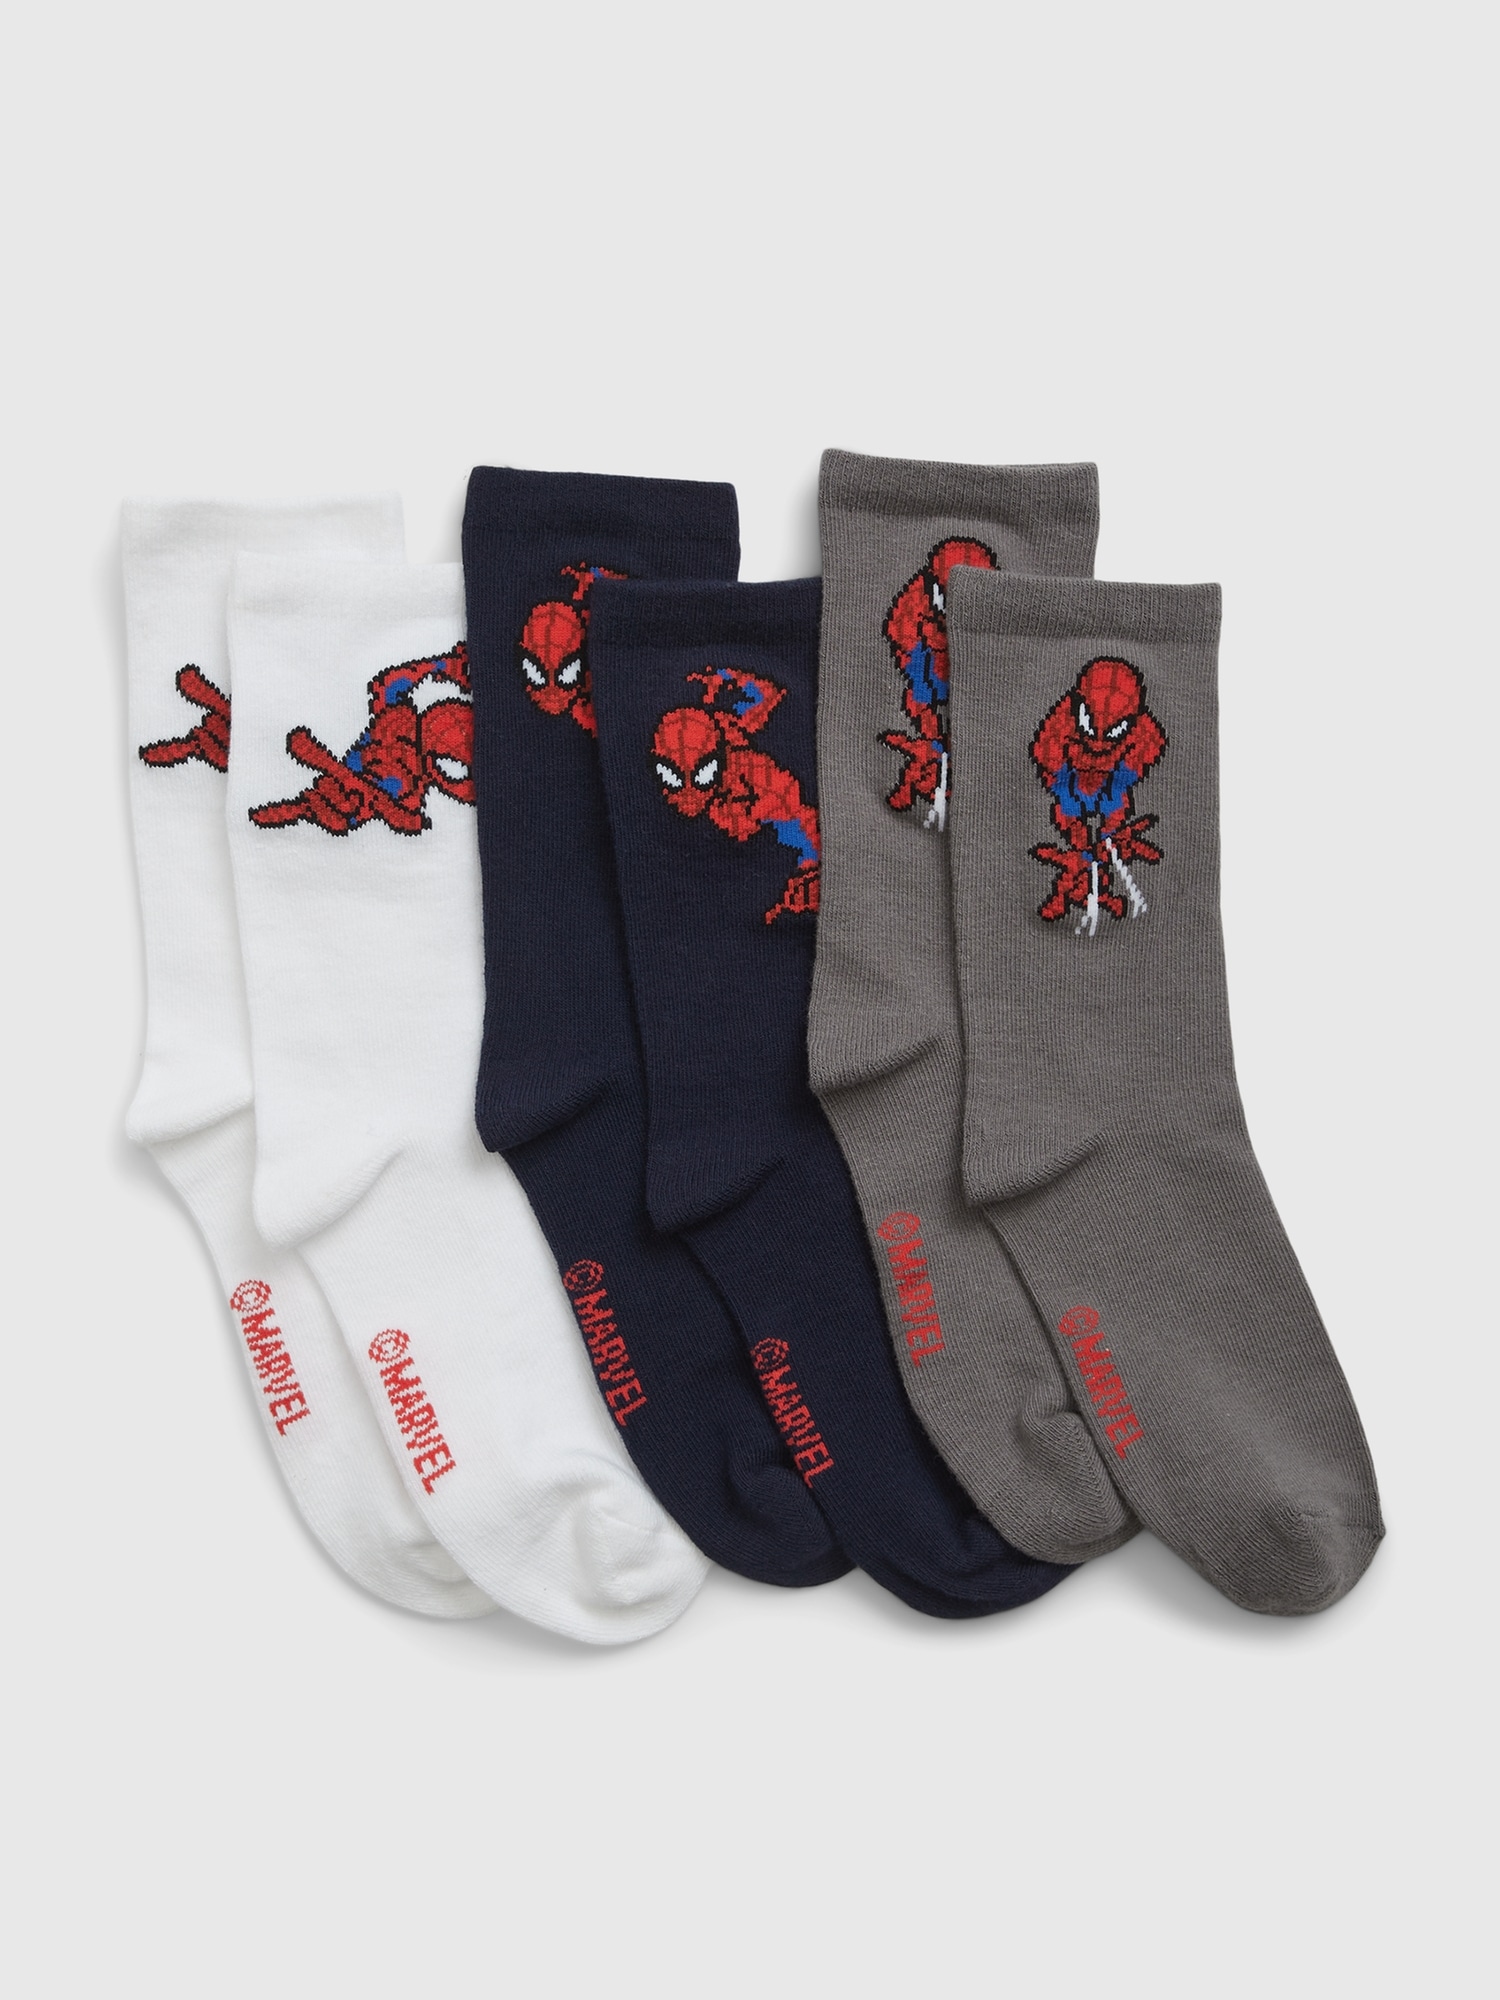 marvel socks fashion super high quality